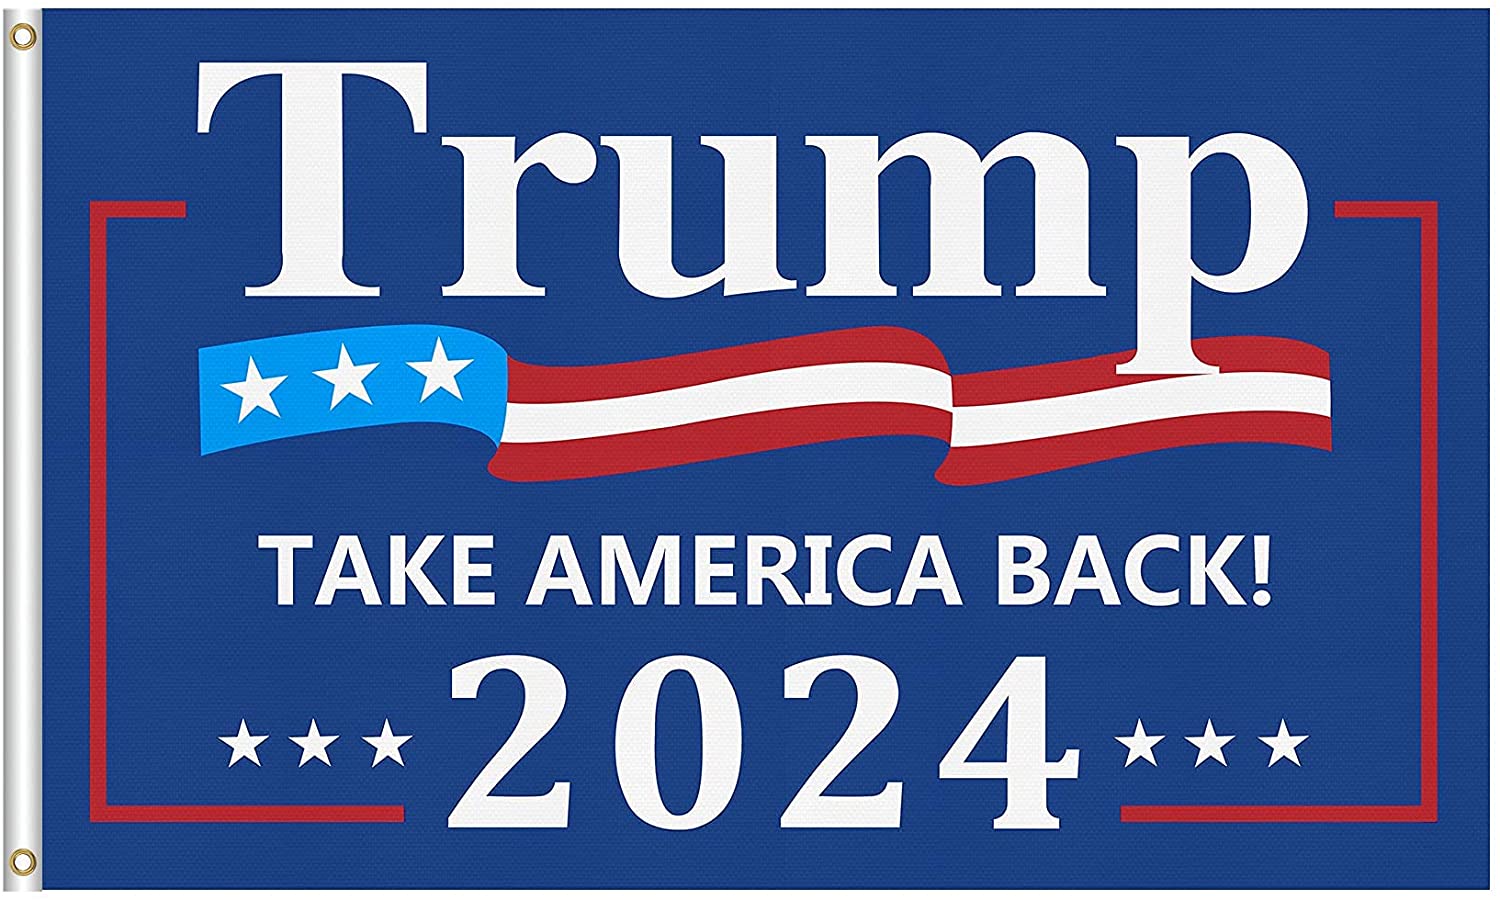 Trump 2024 Wallpapers Top Free Trump 2024 Backgrounds WallpaperAccess